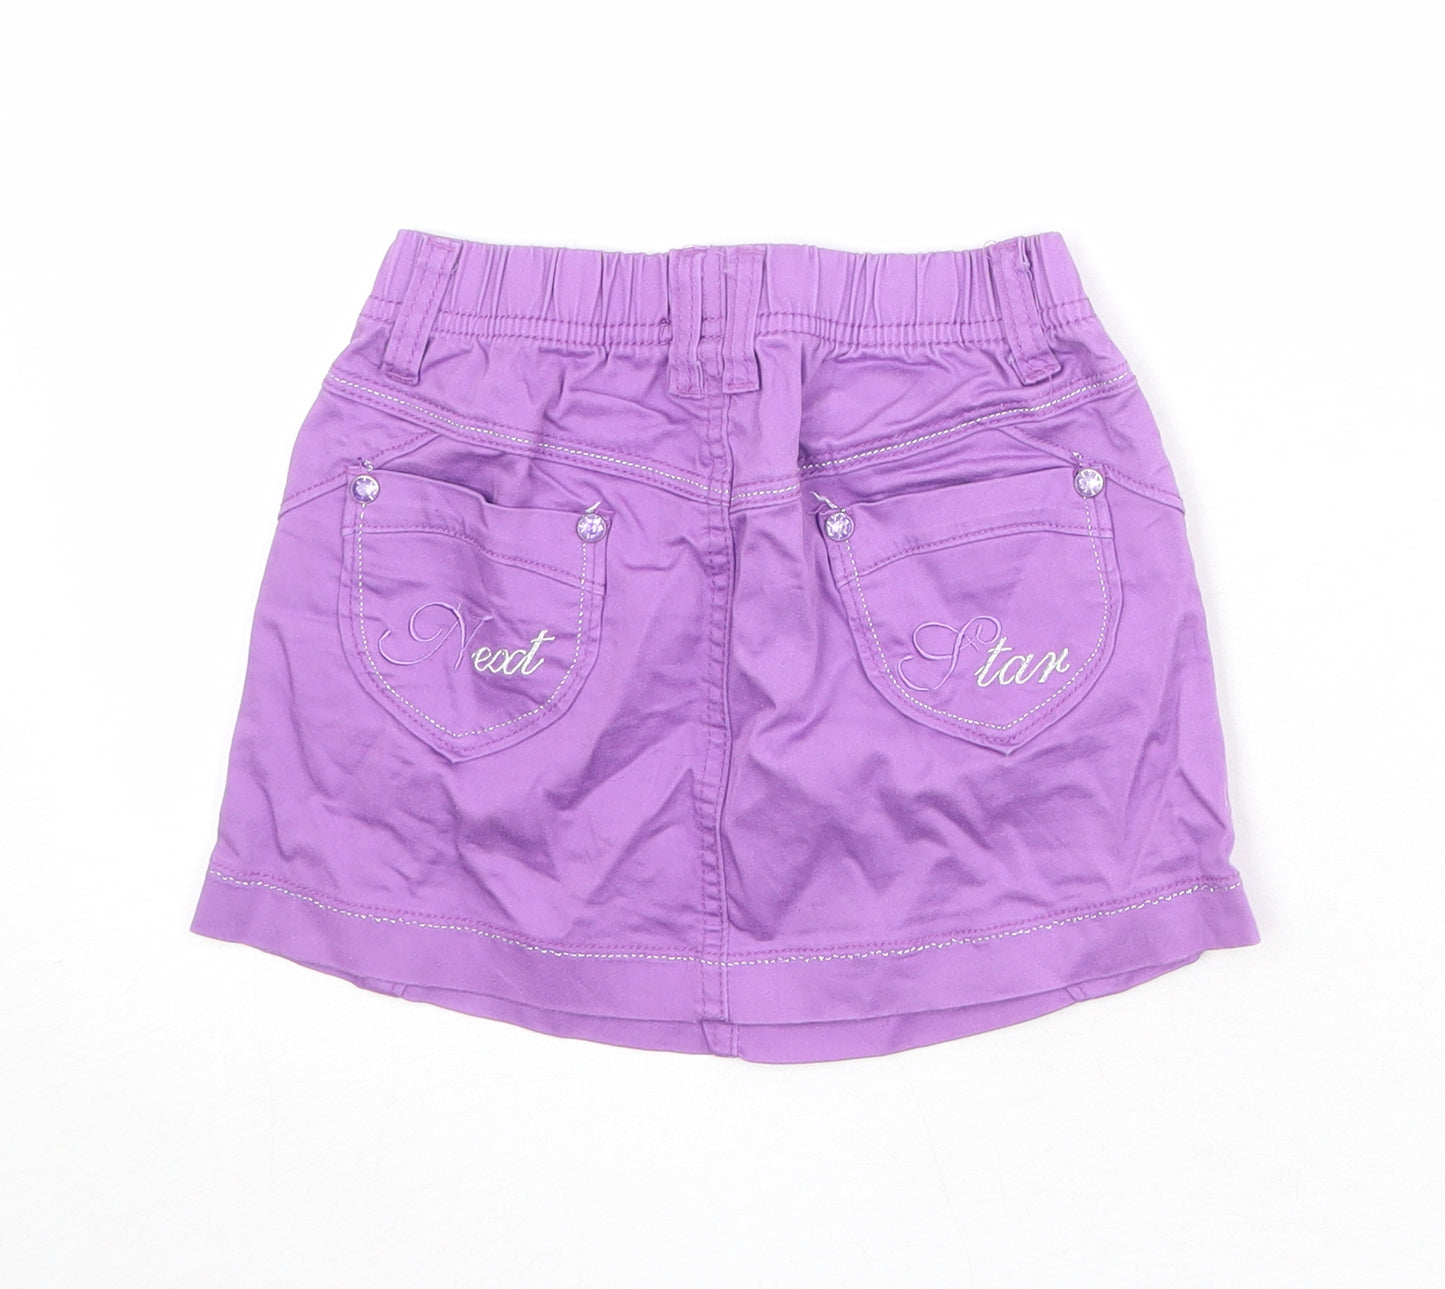 NEXT Girls Purple Cotton Mini Skirt Size 6 Years Regular Pull On - Embellished Pockets